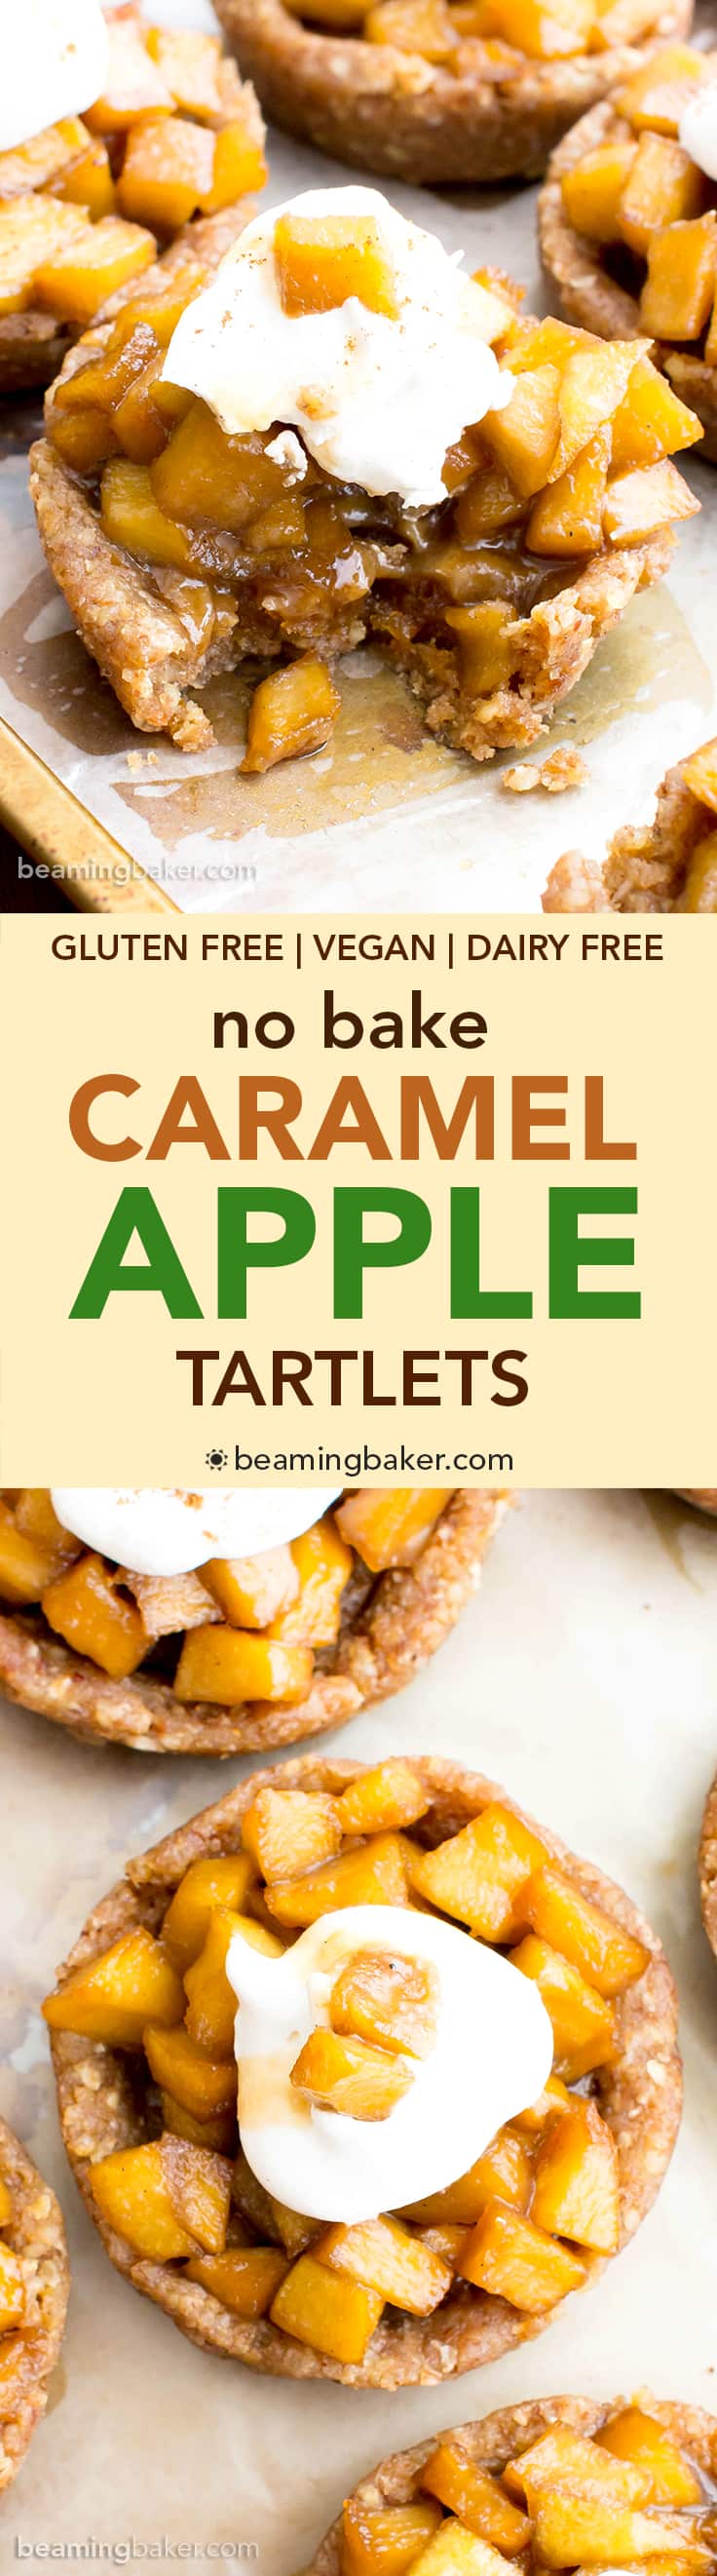 No Bake Caramel Apple Tartlets (V+GF): a whole ingredient recipe for mini caramel pecan tarts bursting with sweet apple flavor. #Vegan #GlutenFree #DairyFree | BeamingBaker.com | @BeamingBaker